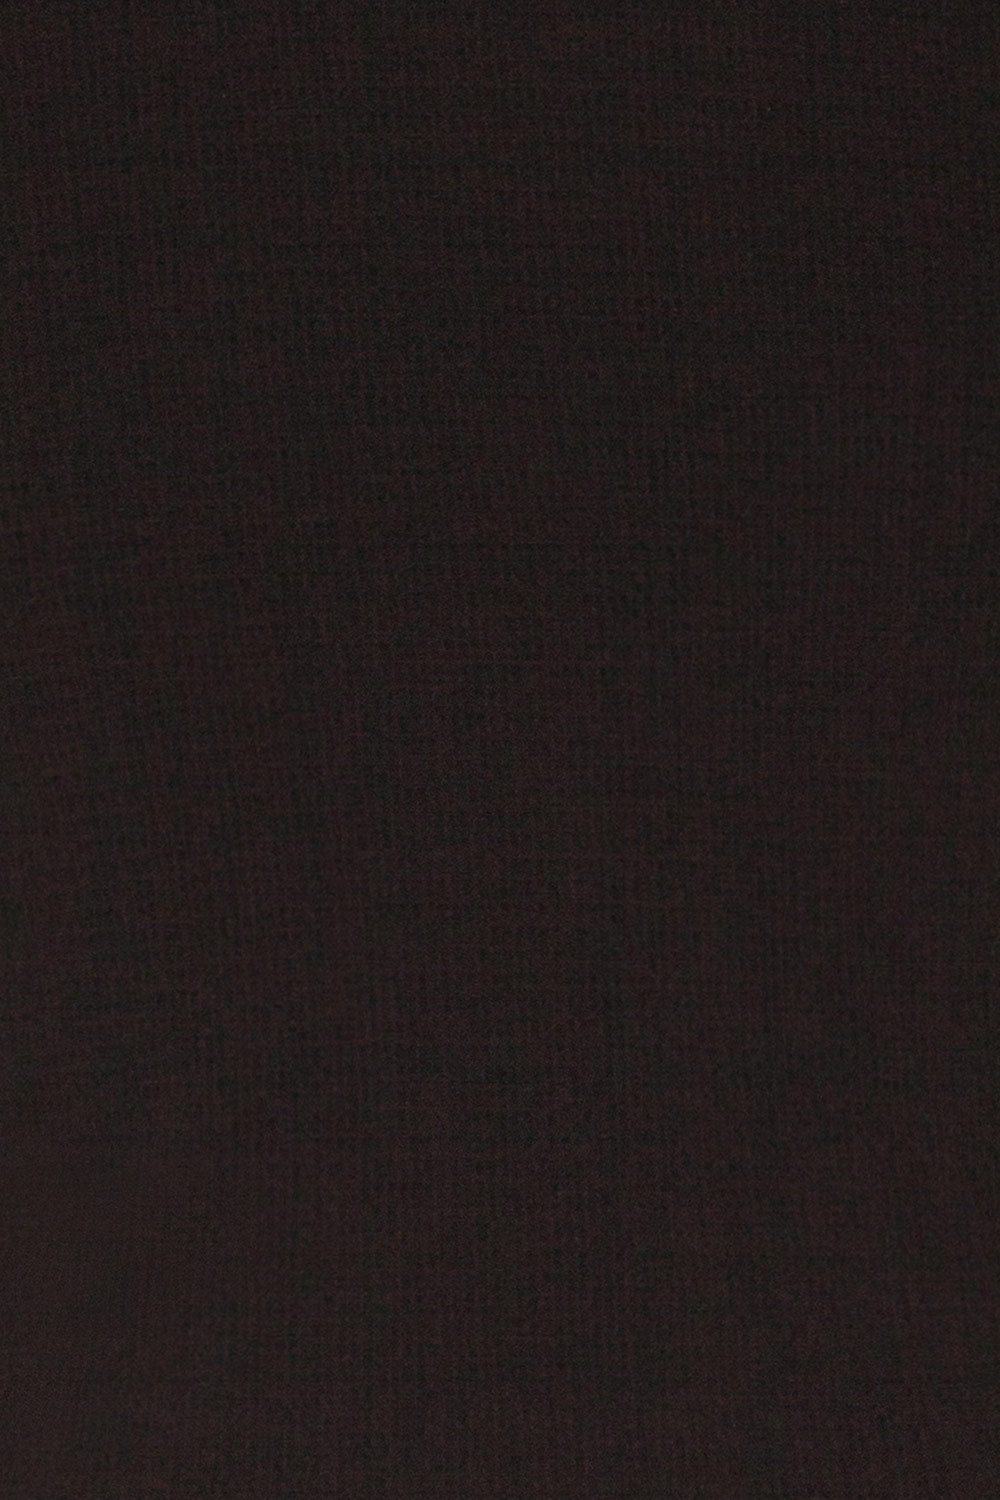 Cardiff Black V-Neck Knotted Top | La Petite Garçonne fabric detail 